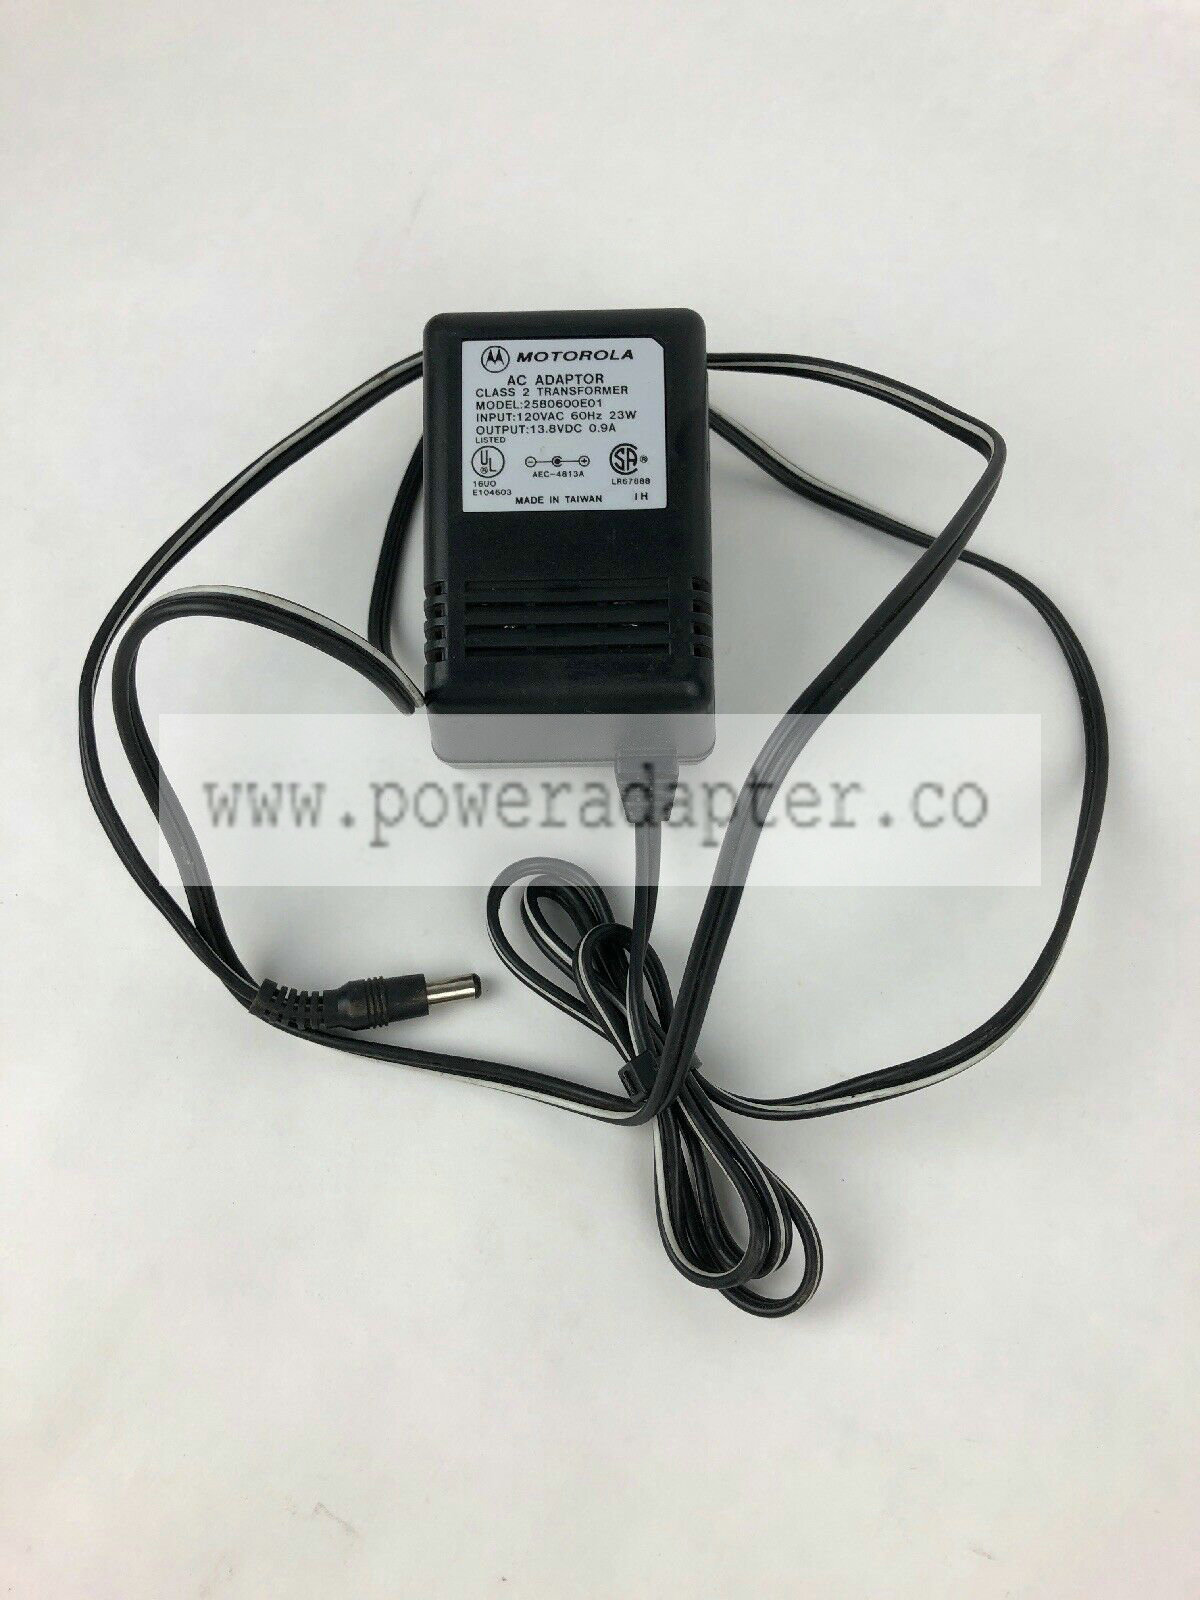 Genuine Motorola AC Adapter Radio Base Charger Plug 13.8V 0.9A Model 2580600E01 Brand: Motorola MPN: Class 2 Trans